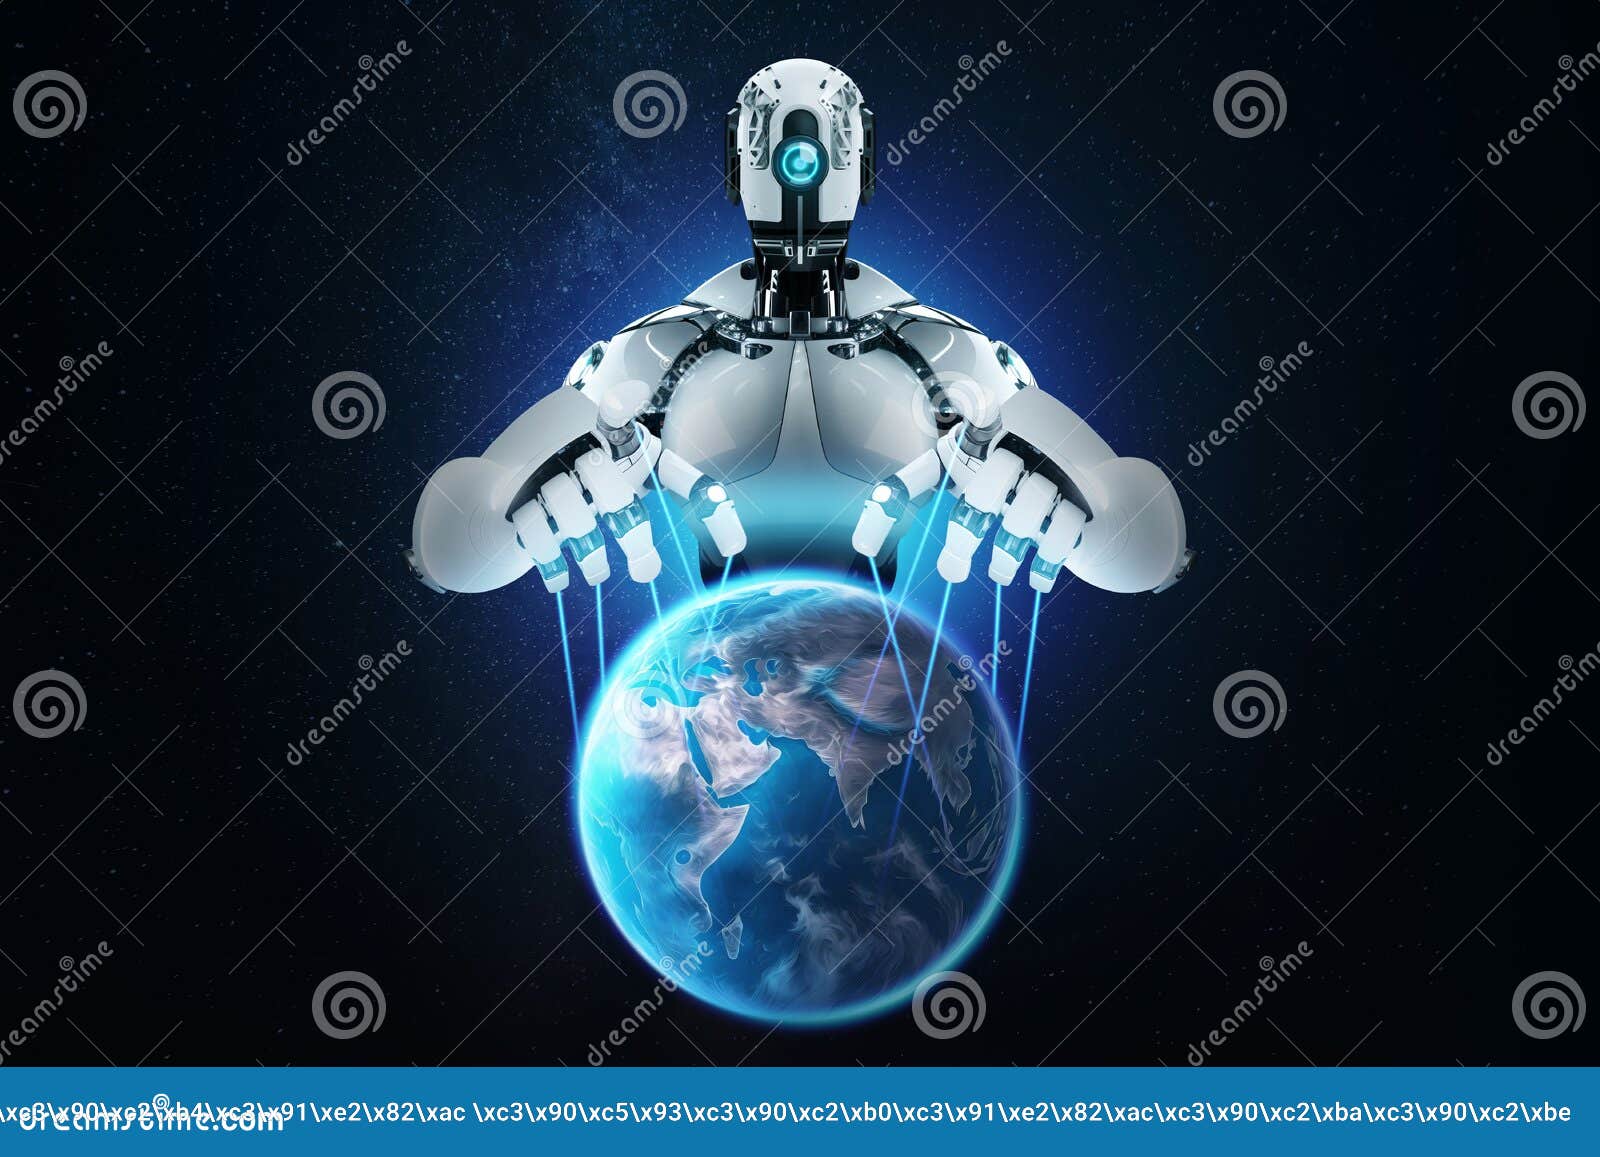 Robotic Planet